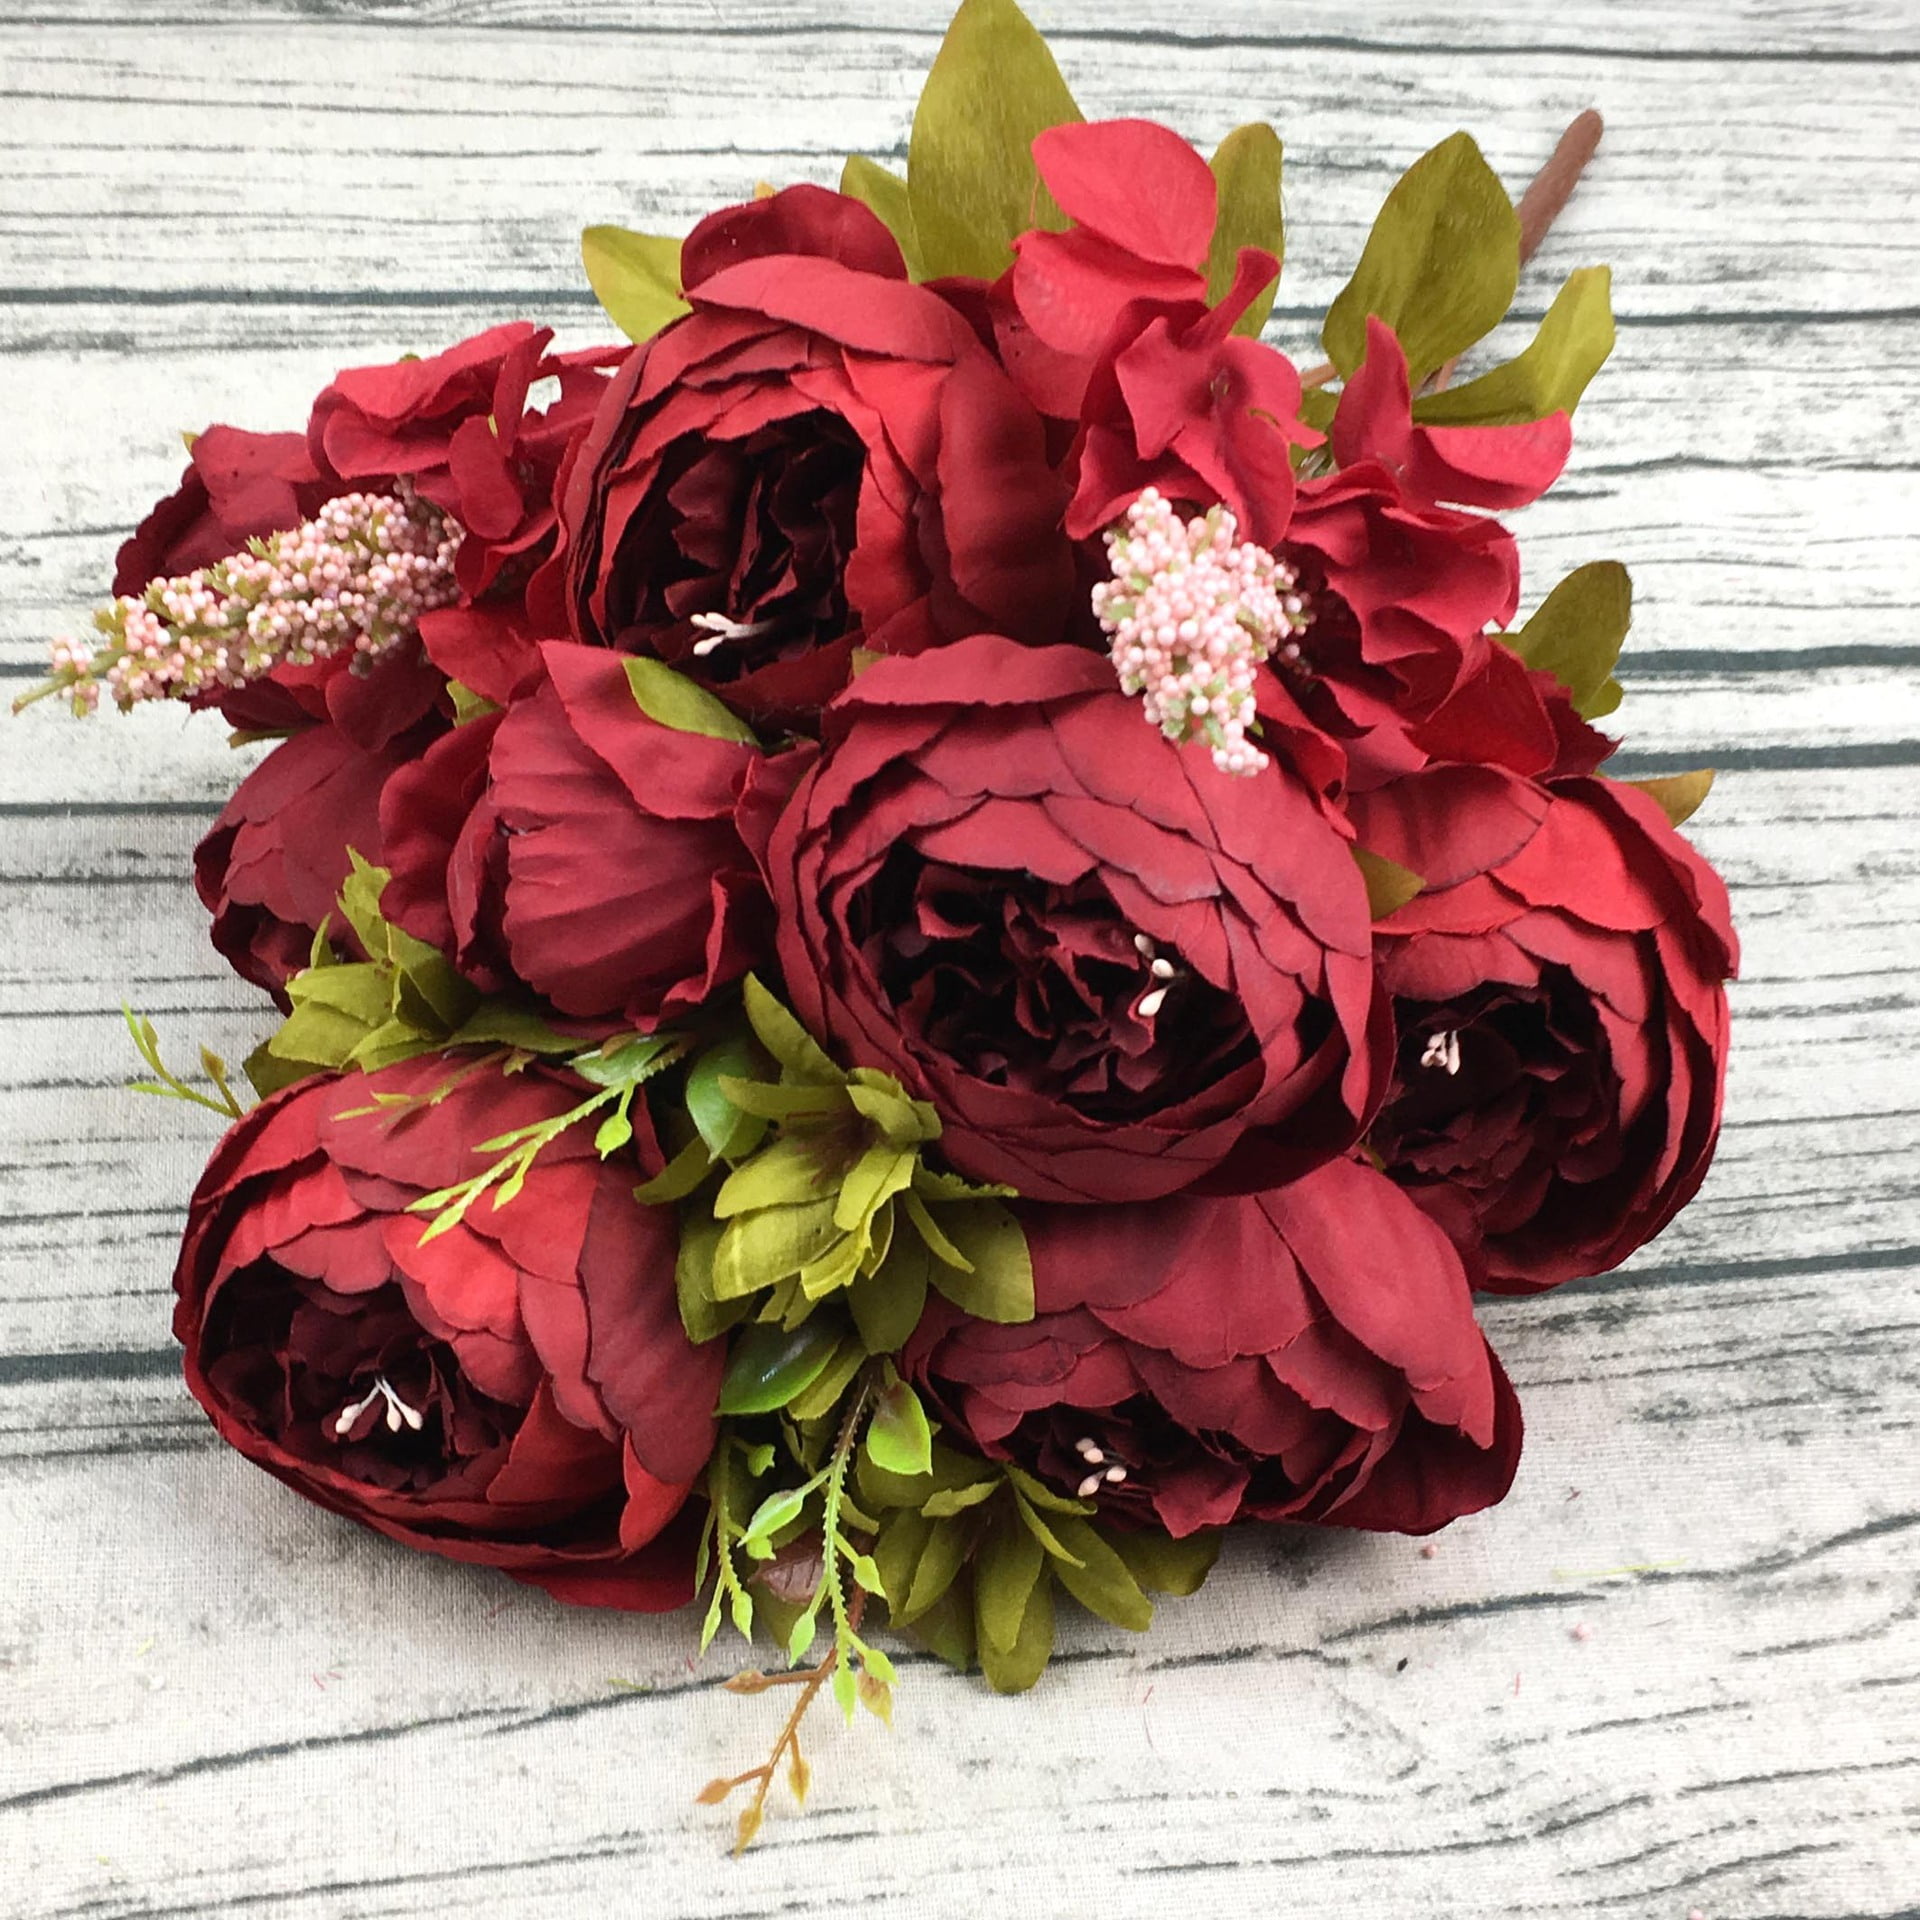 Burgundy Peonies Large Realistic Deep Red Peony Artificial Luxury Silk Flowers